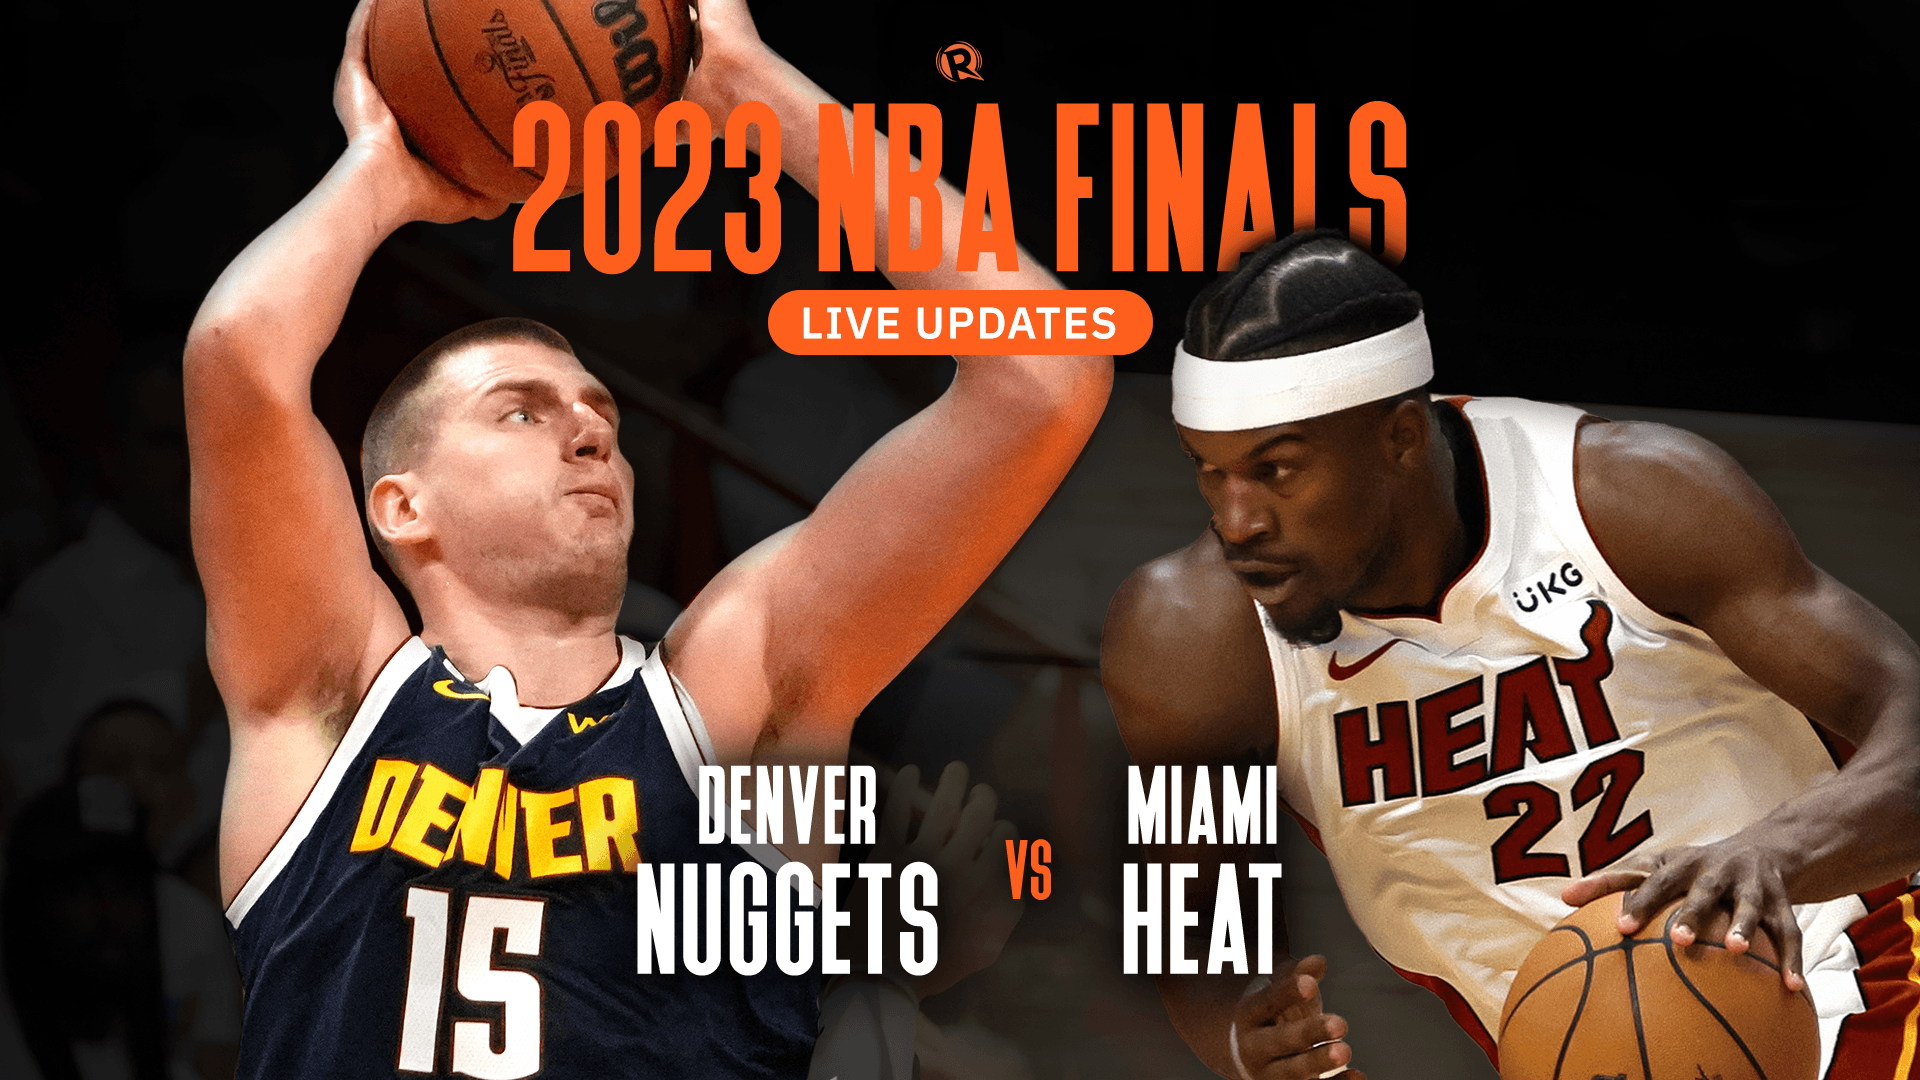 HIGHLIGHTS Denver Nuggets vs Miami Heat, Game 5 NBA Finals 2023